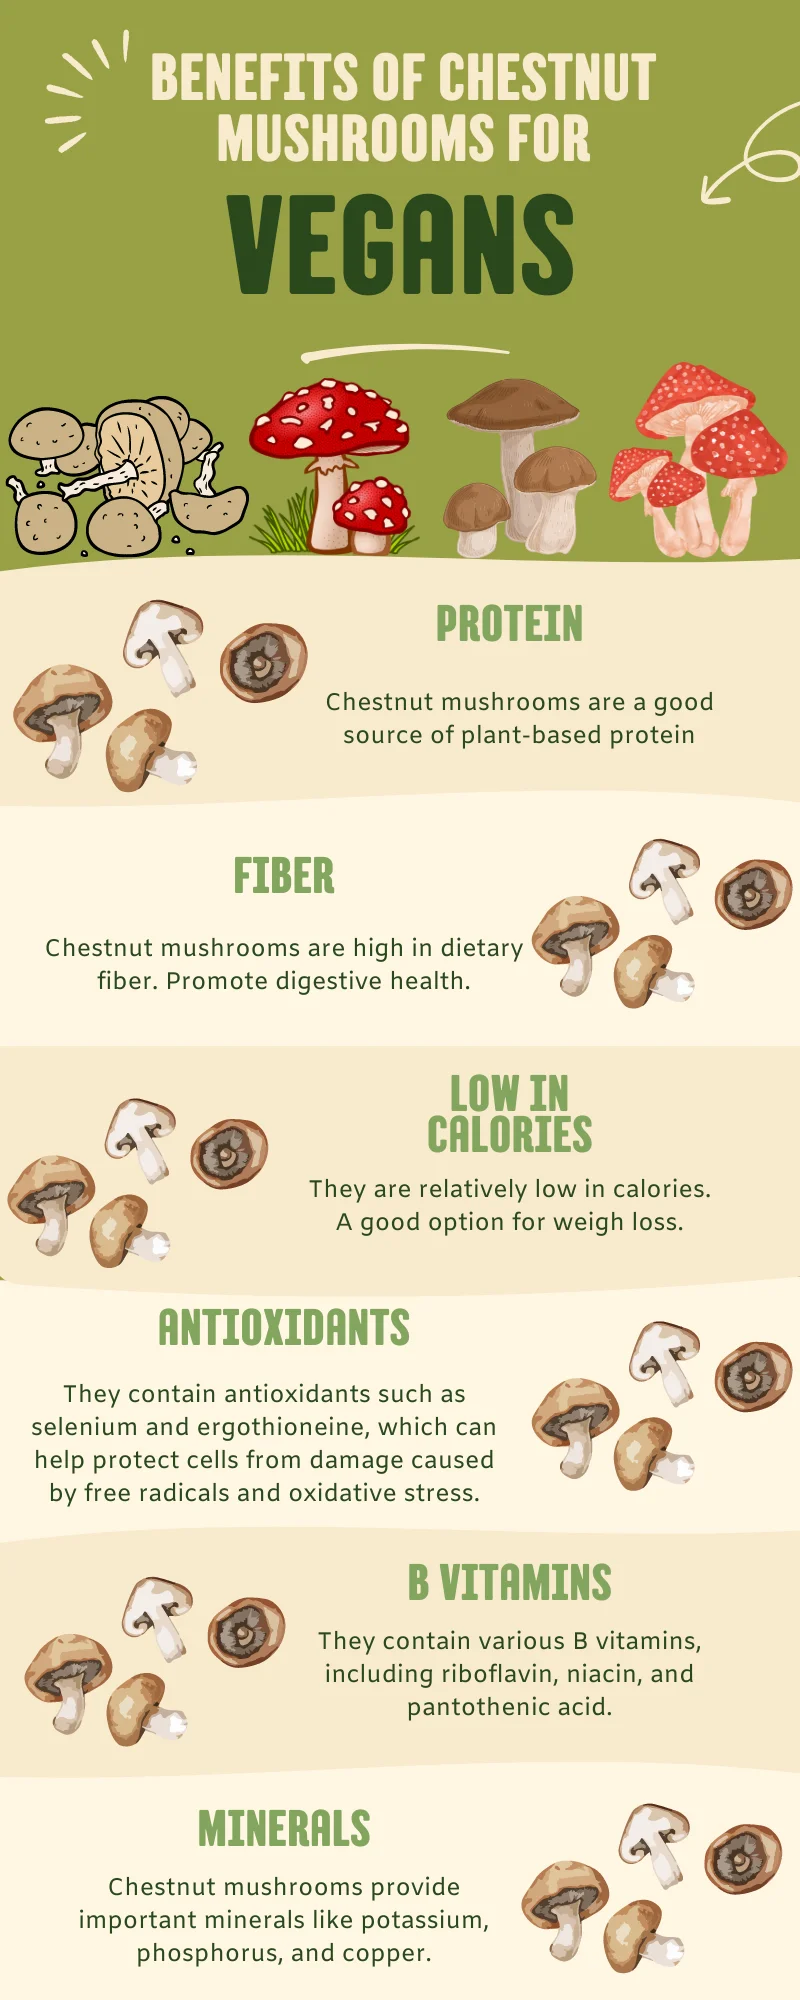 Are chestnut mushrooms suitable for a vegan diet